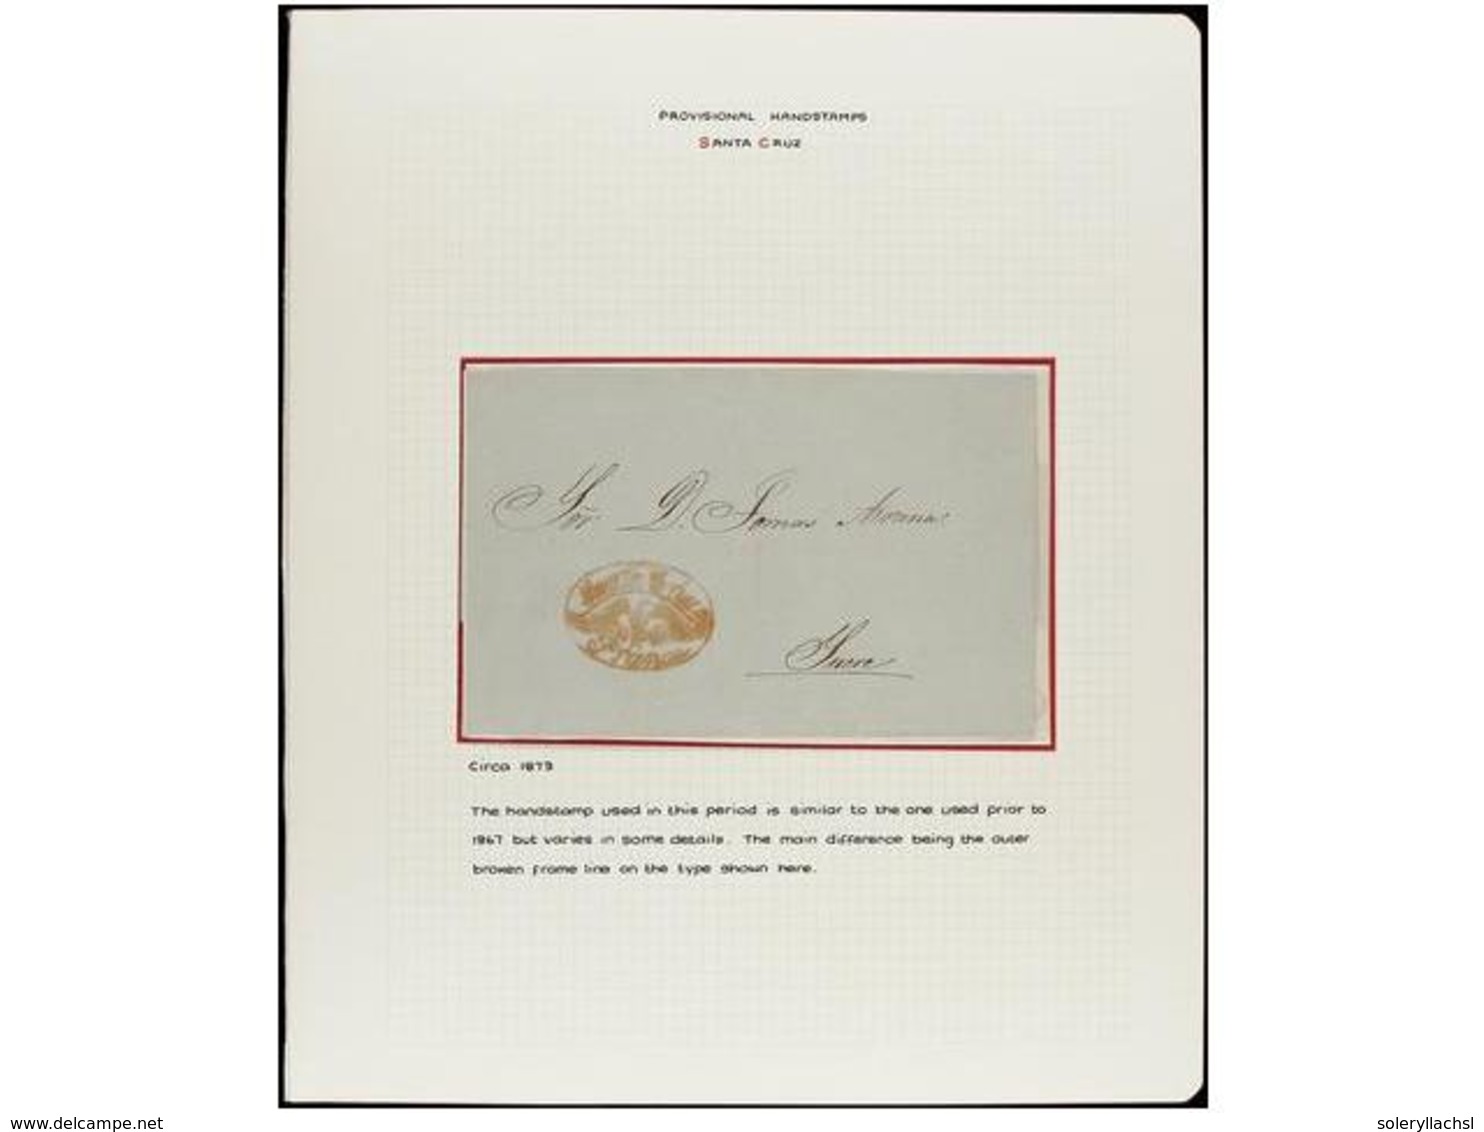 BOLIVIA. 1880-1936. MARCAS PROVISIONALES DE PORTES PAGADOS. Colección de 48 cartas con marcas Provisionales de Portes Pa